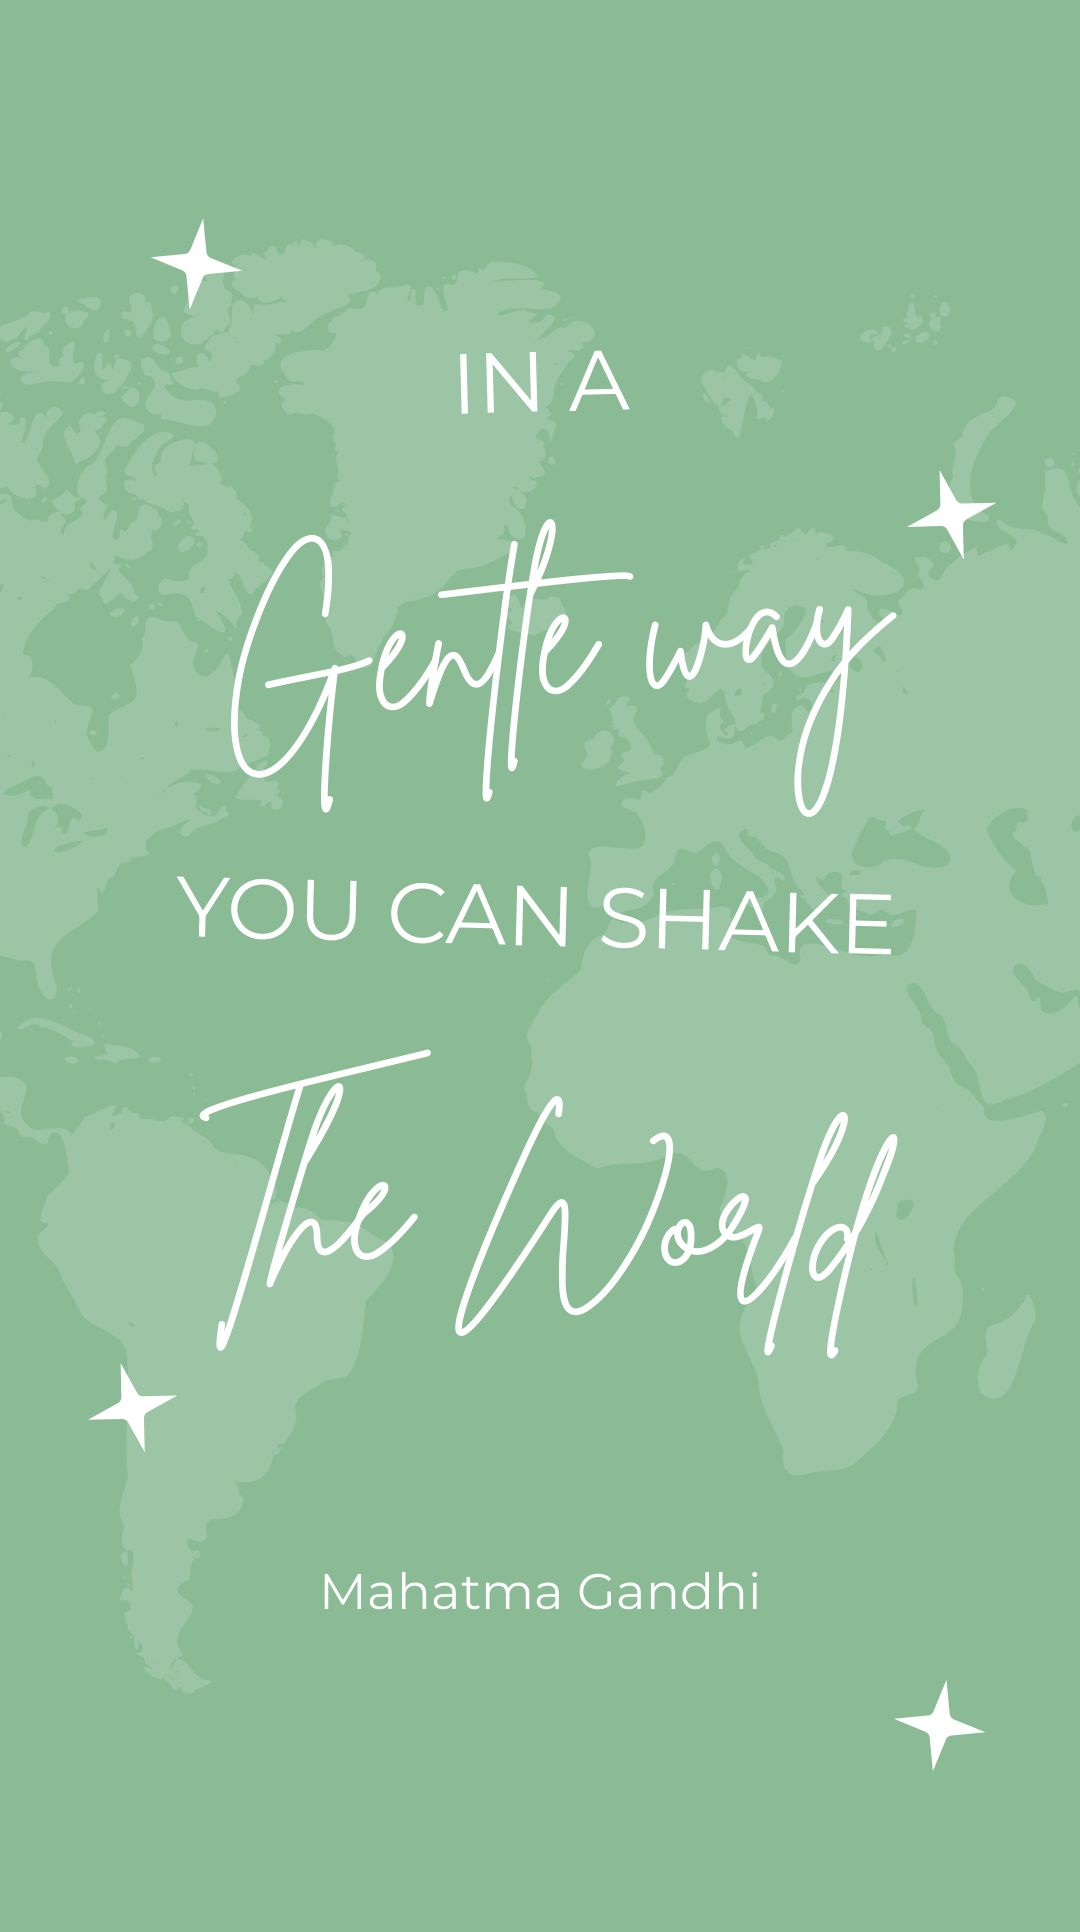 Mahatma Gandhi - In a gentle way you can shake the world.